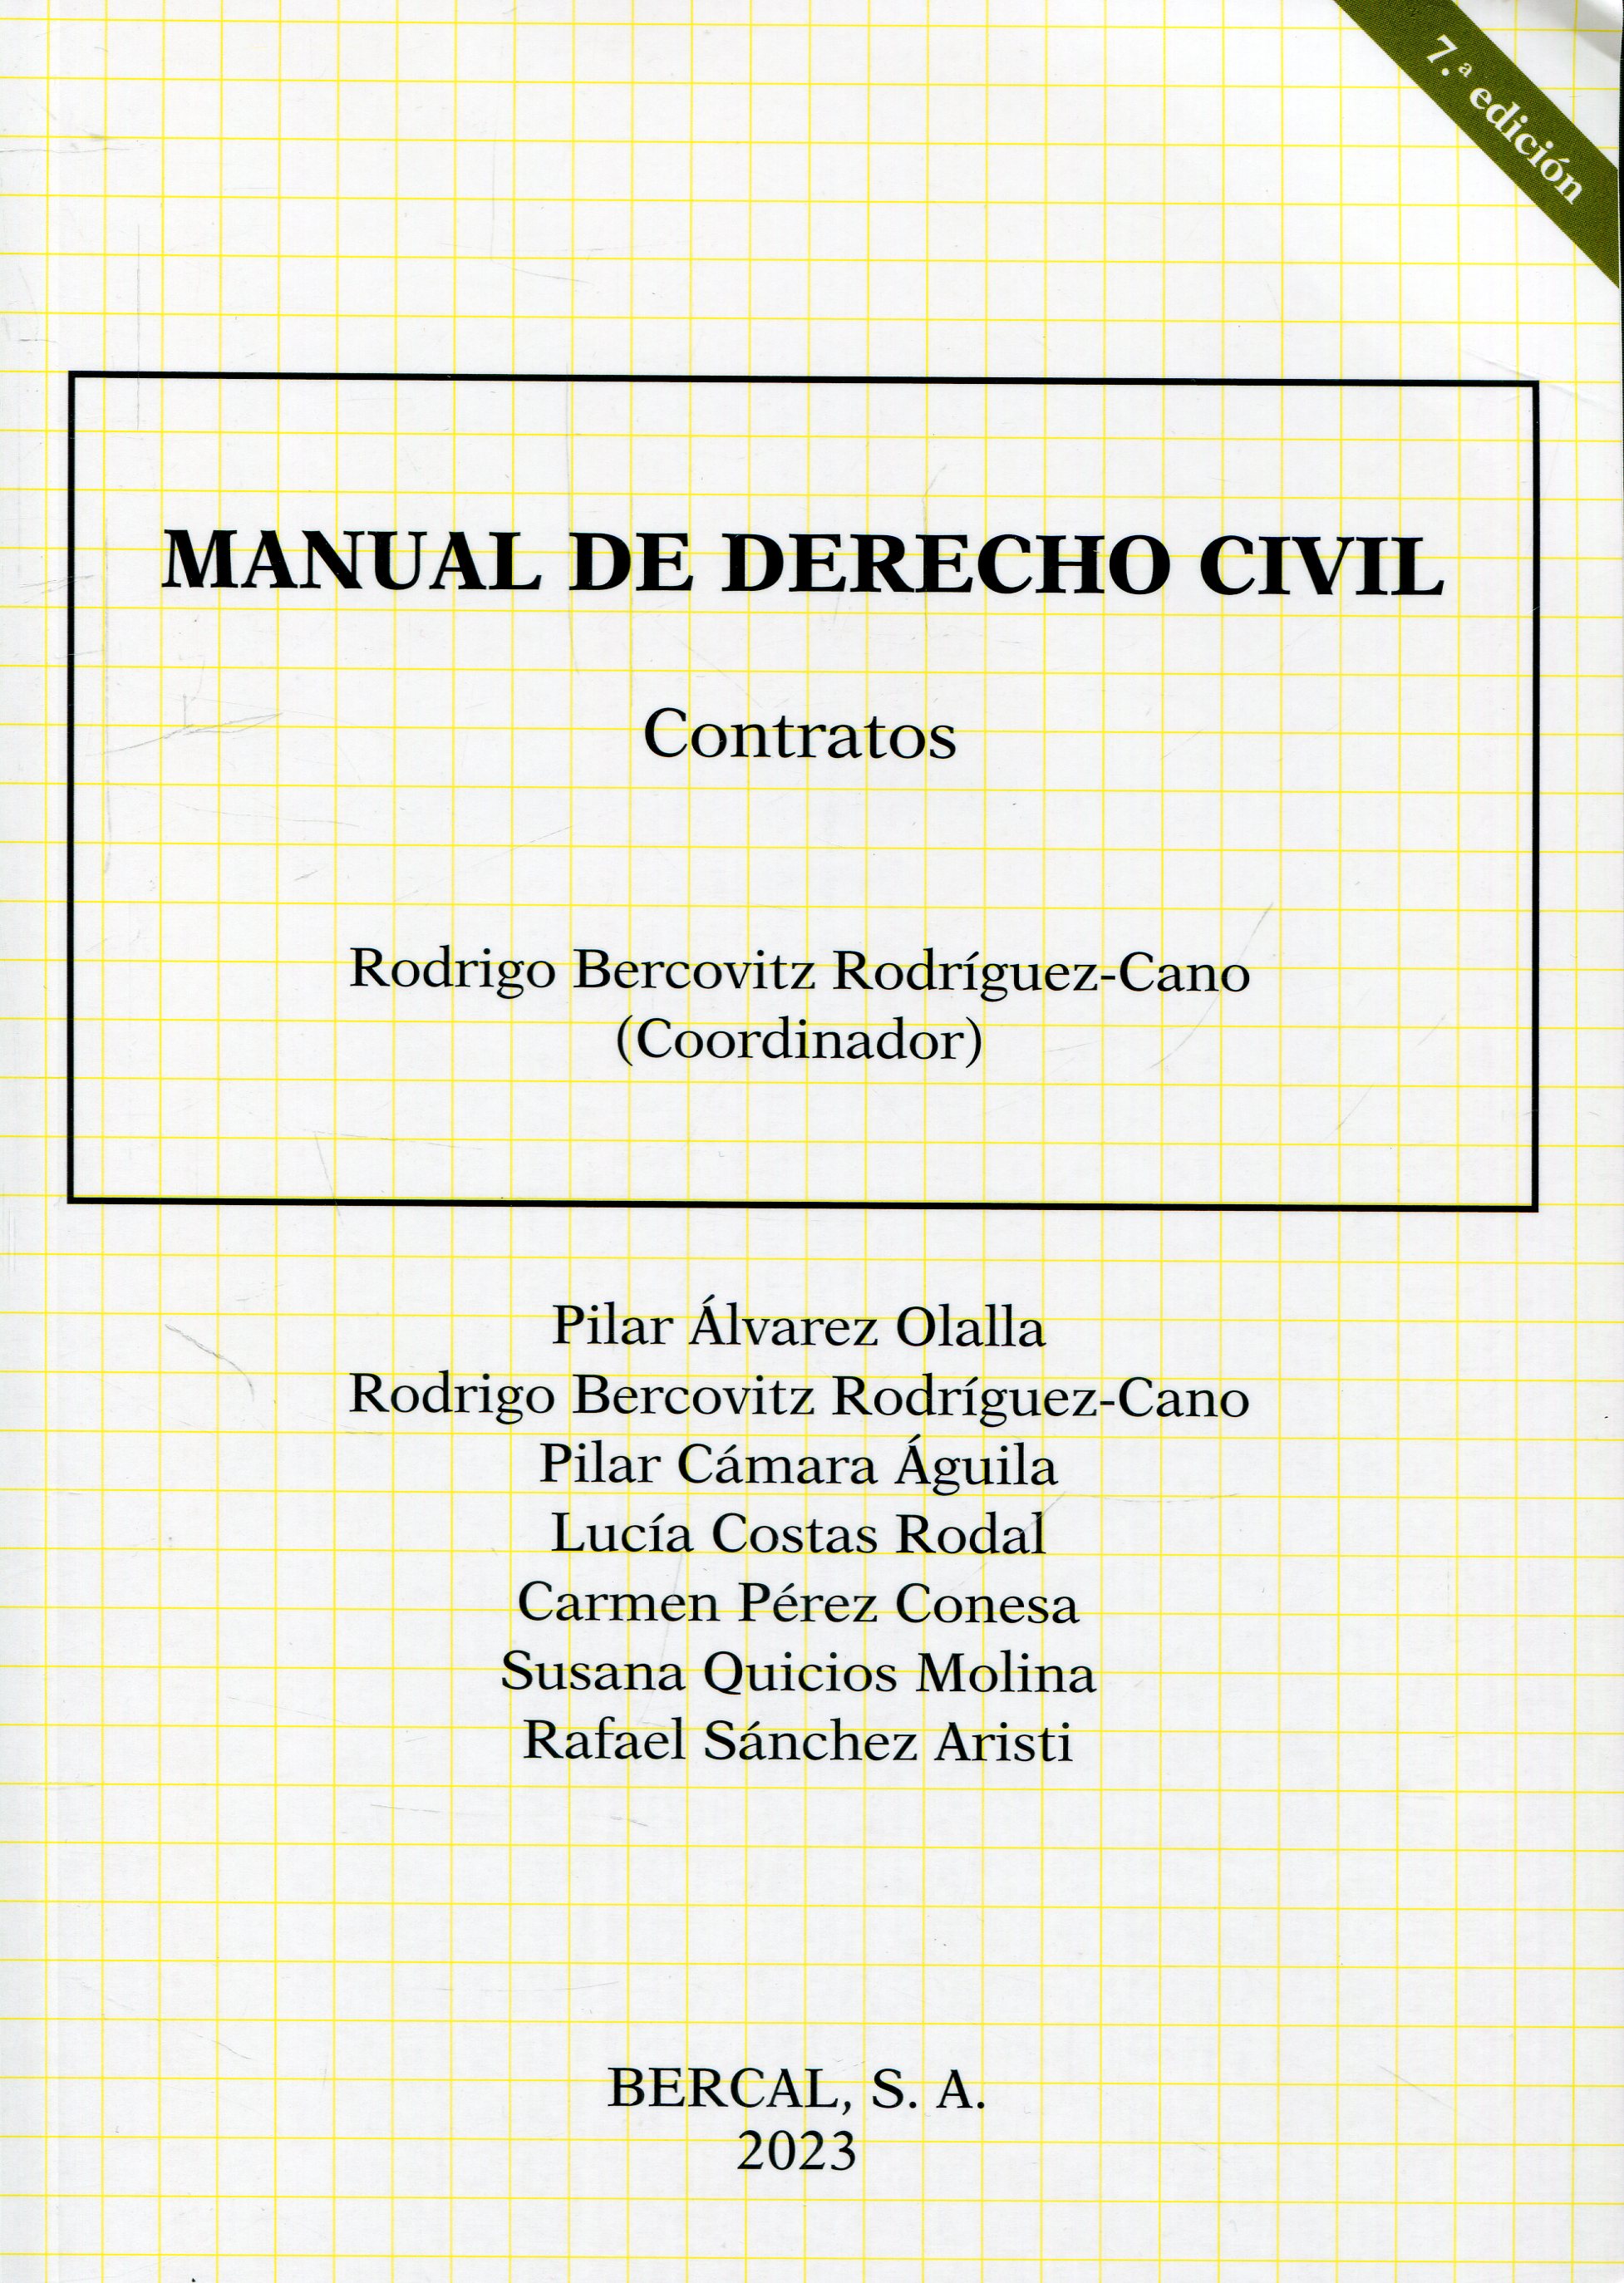 Manual de Derecho Civil